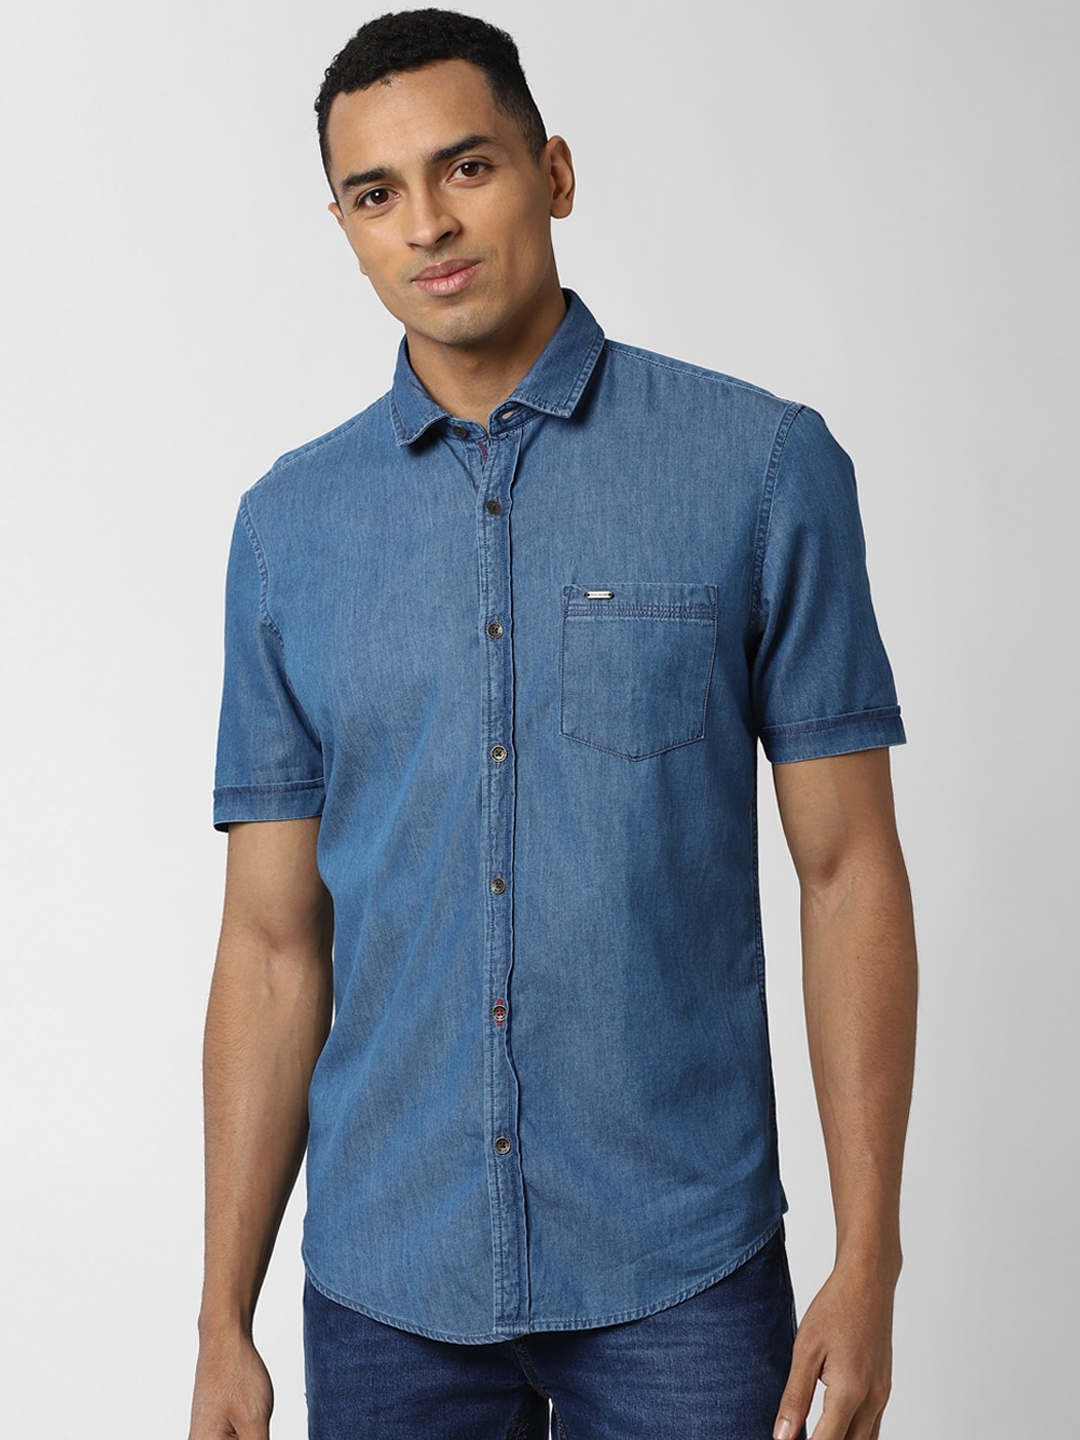 Peter England Casuals Men Blue Slim Fit Solid Denim Casual Shirt